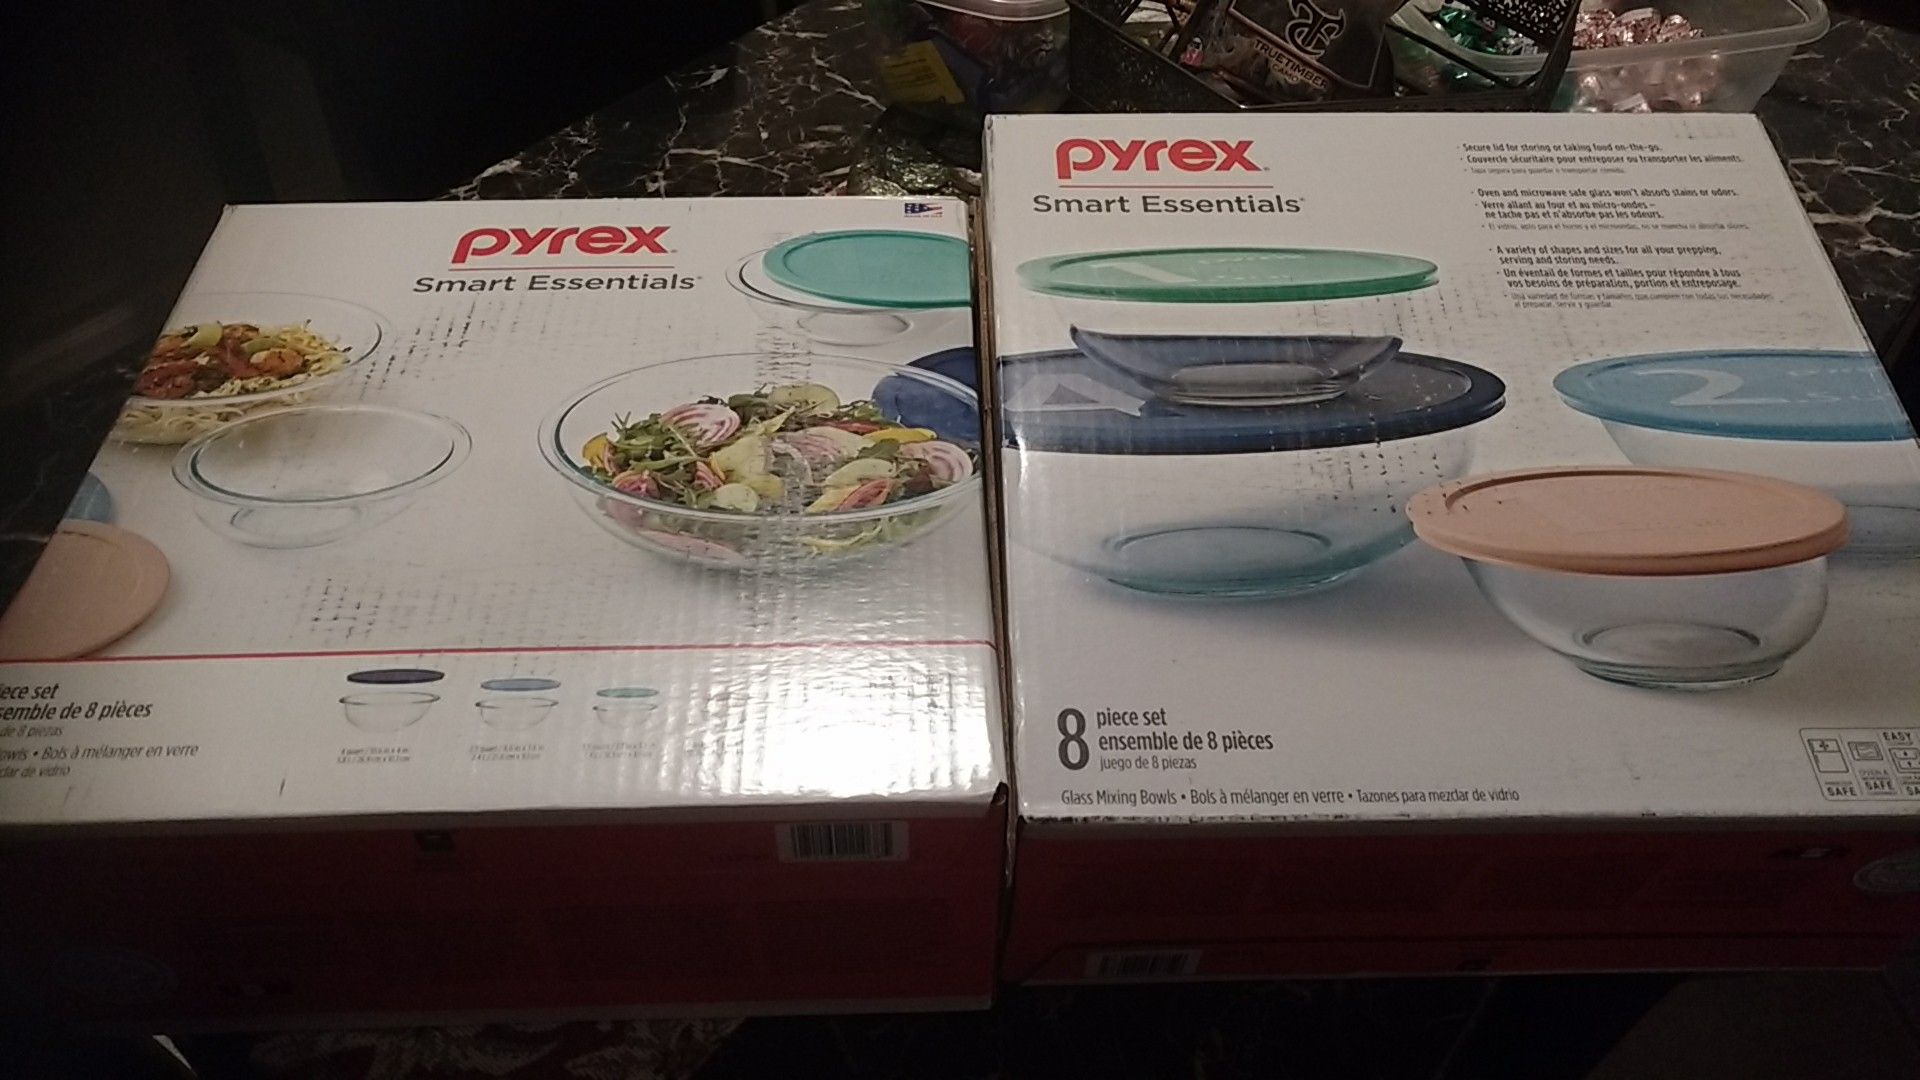 Pyrex 8 piece glass bowls with lids